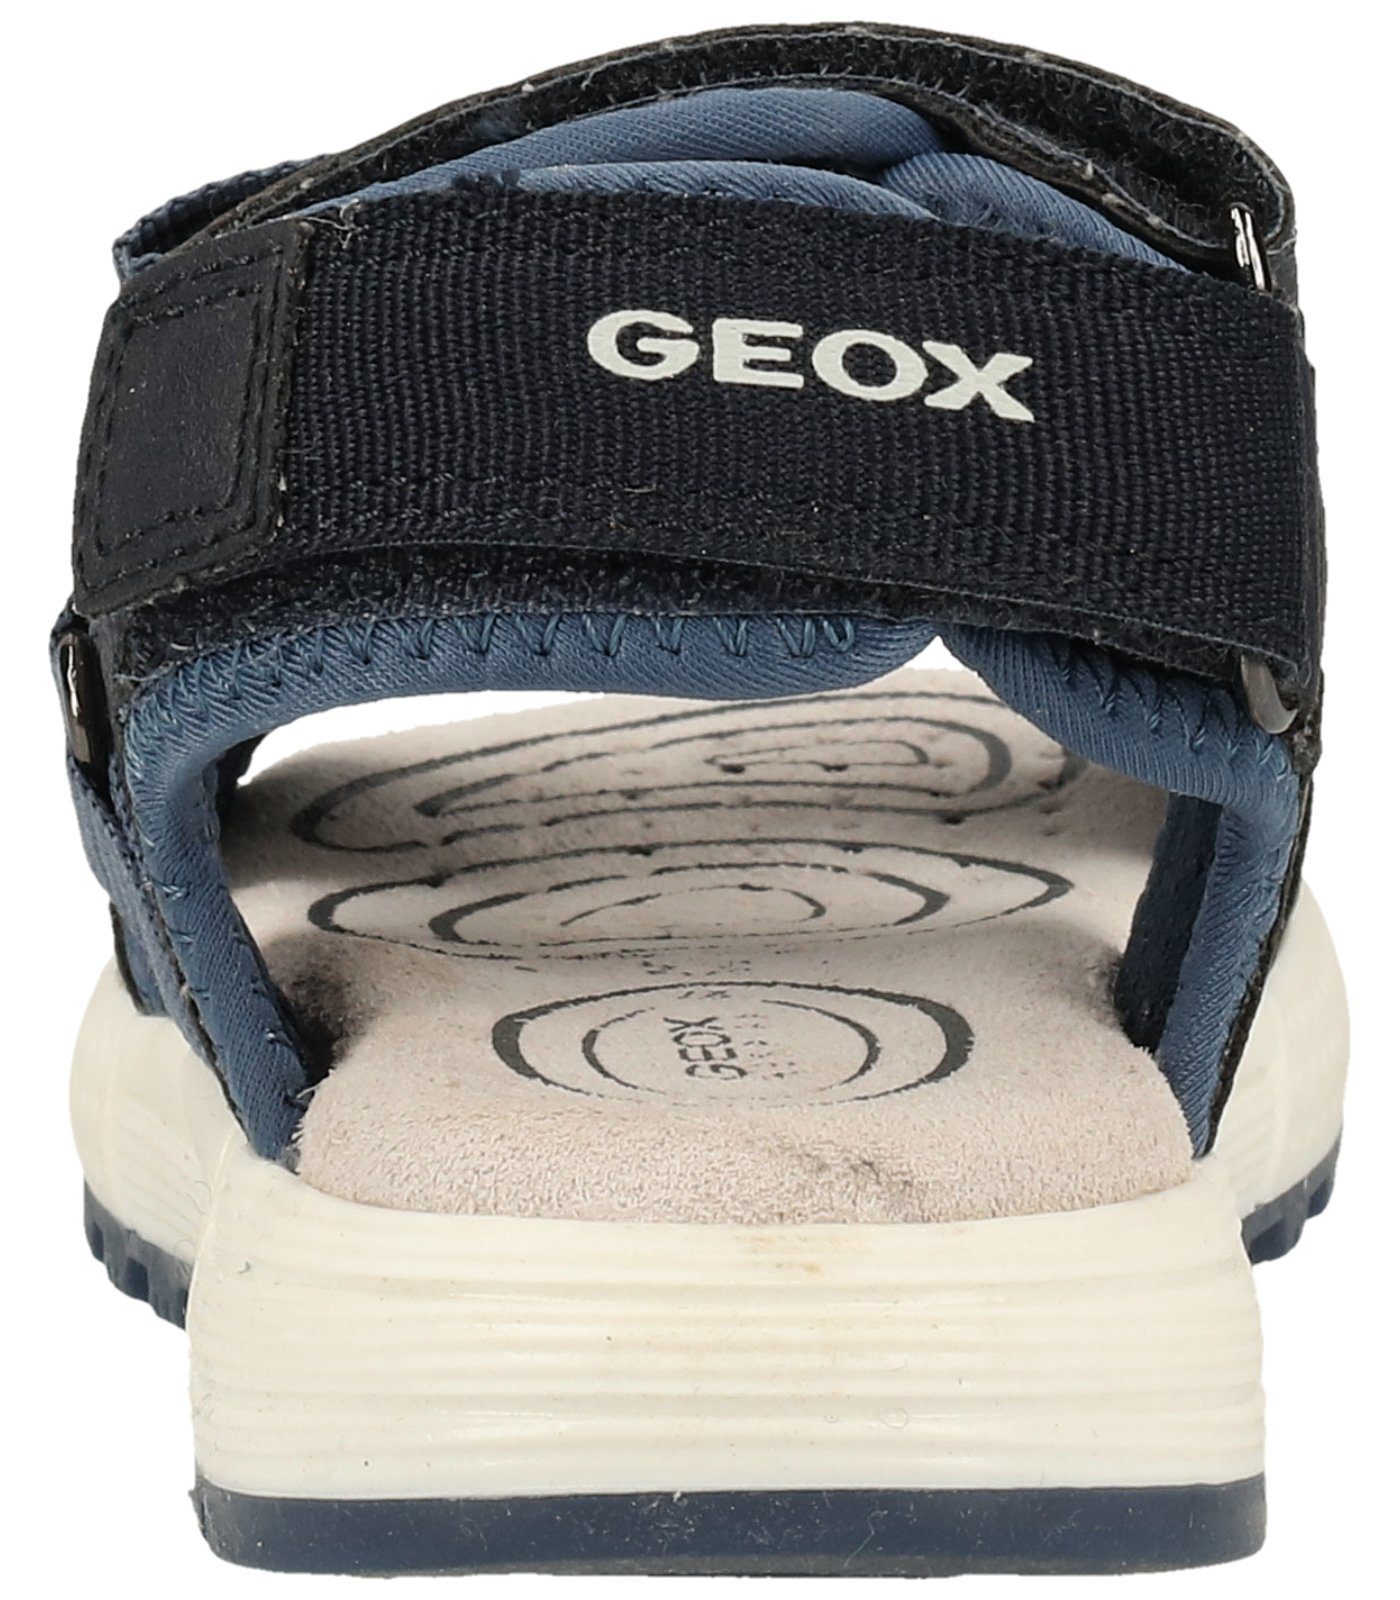 Geox Sandalen Trekkingsandale Navy Lederimitat/Textil